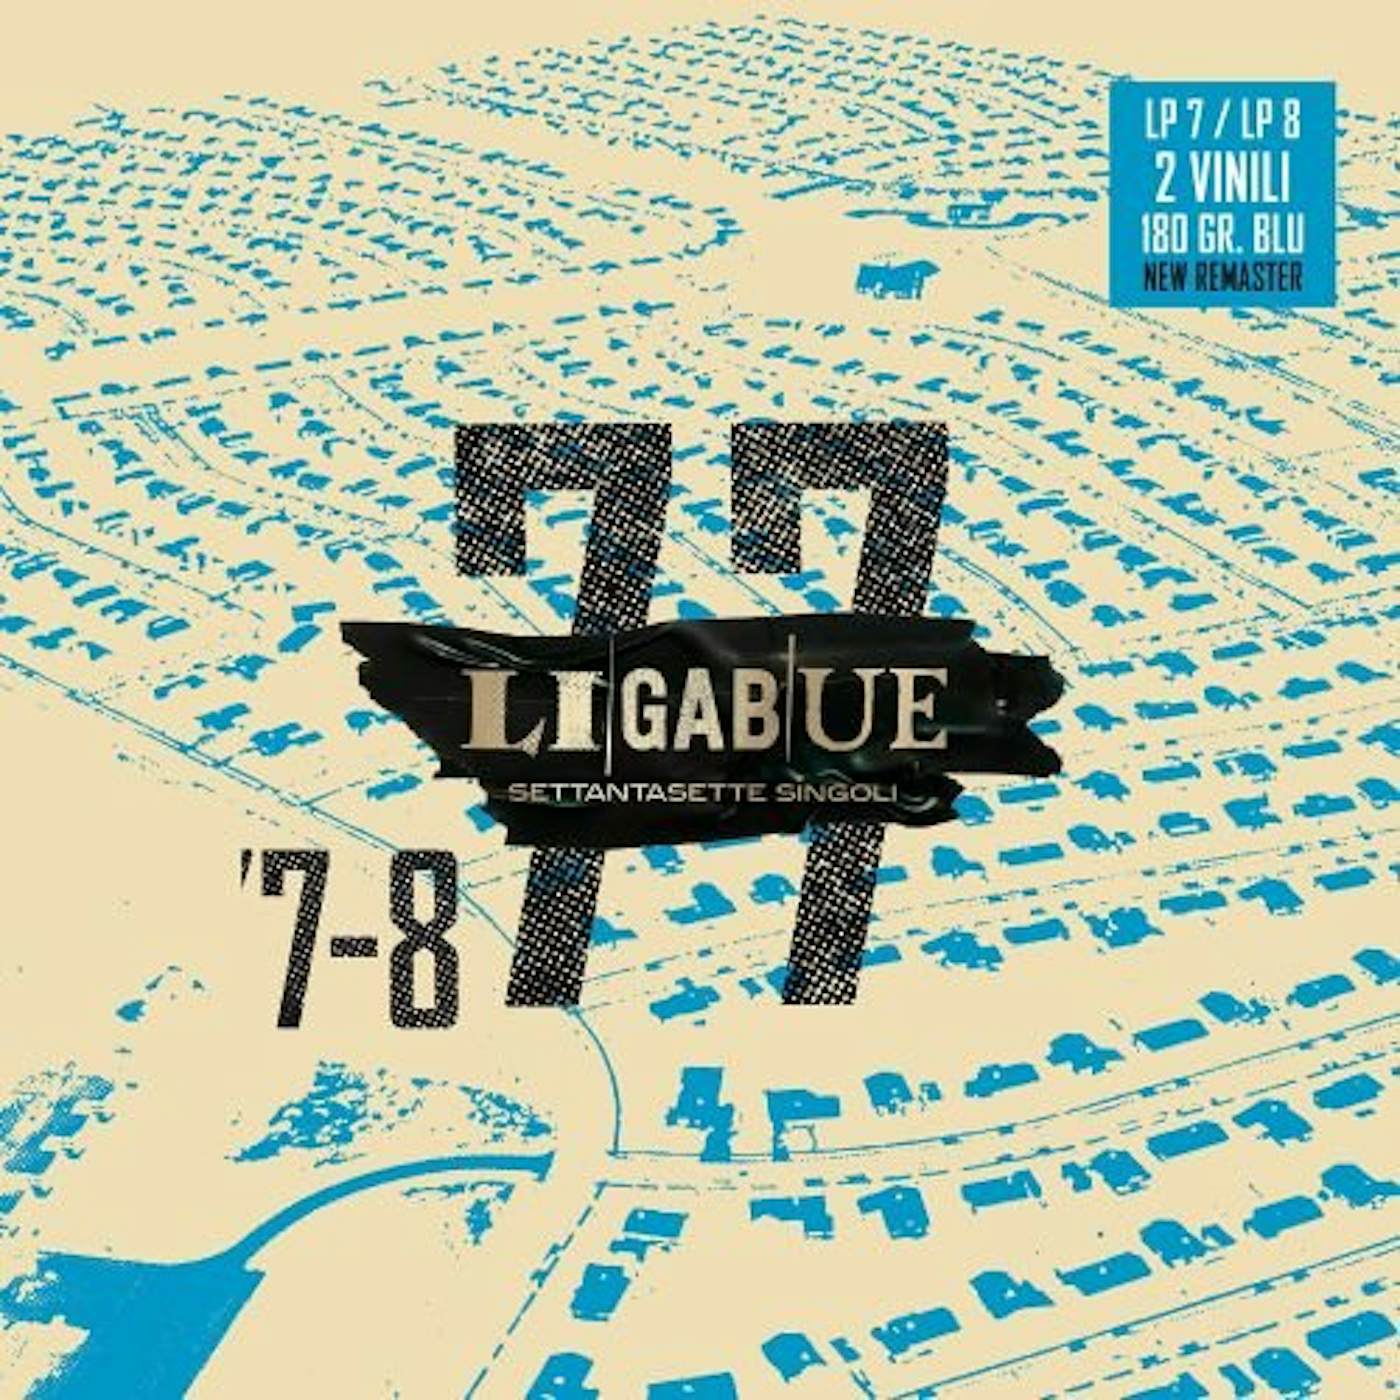 Ligabue 77 SINGOLI / LP 7-LP 8 Vinyl Record